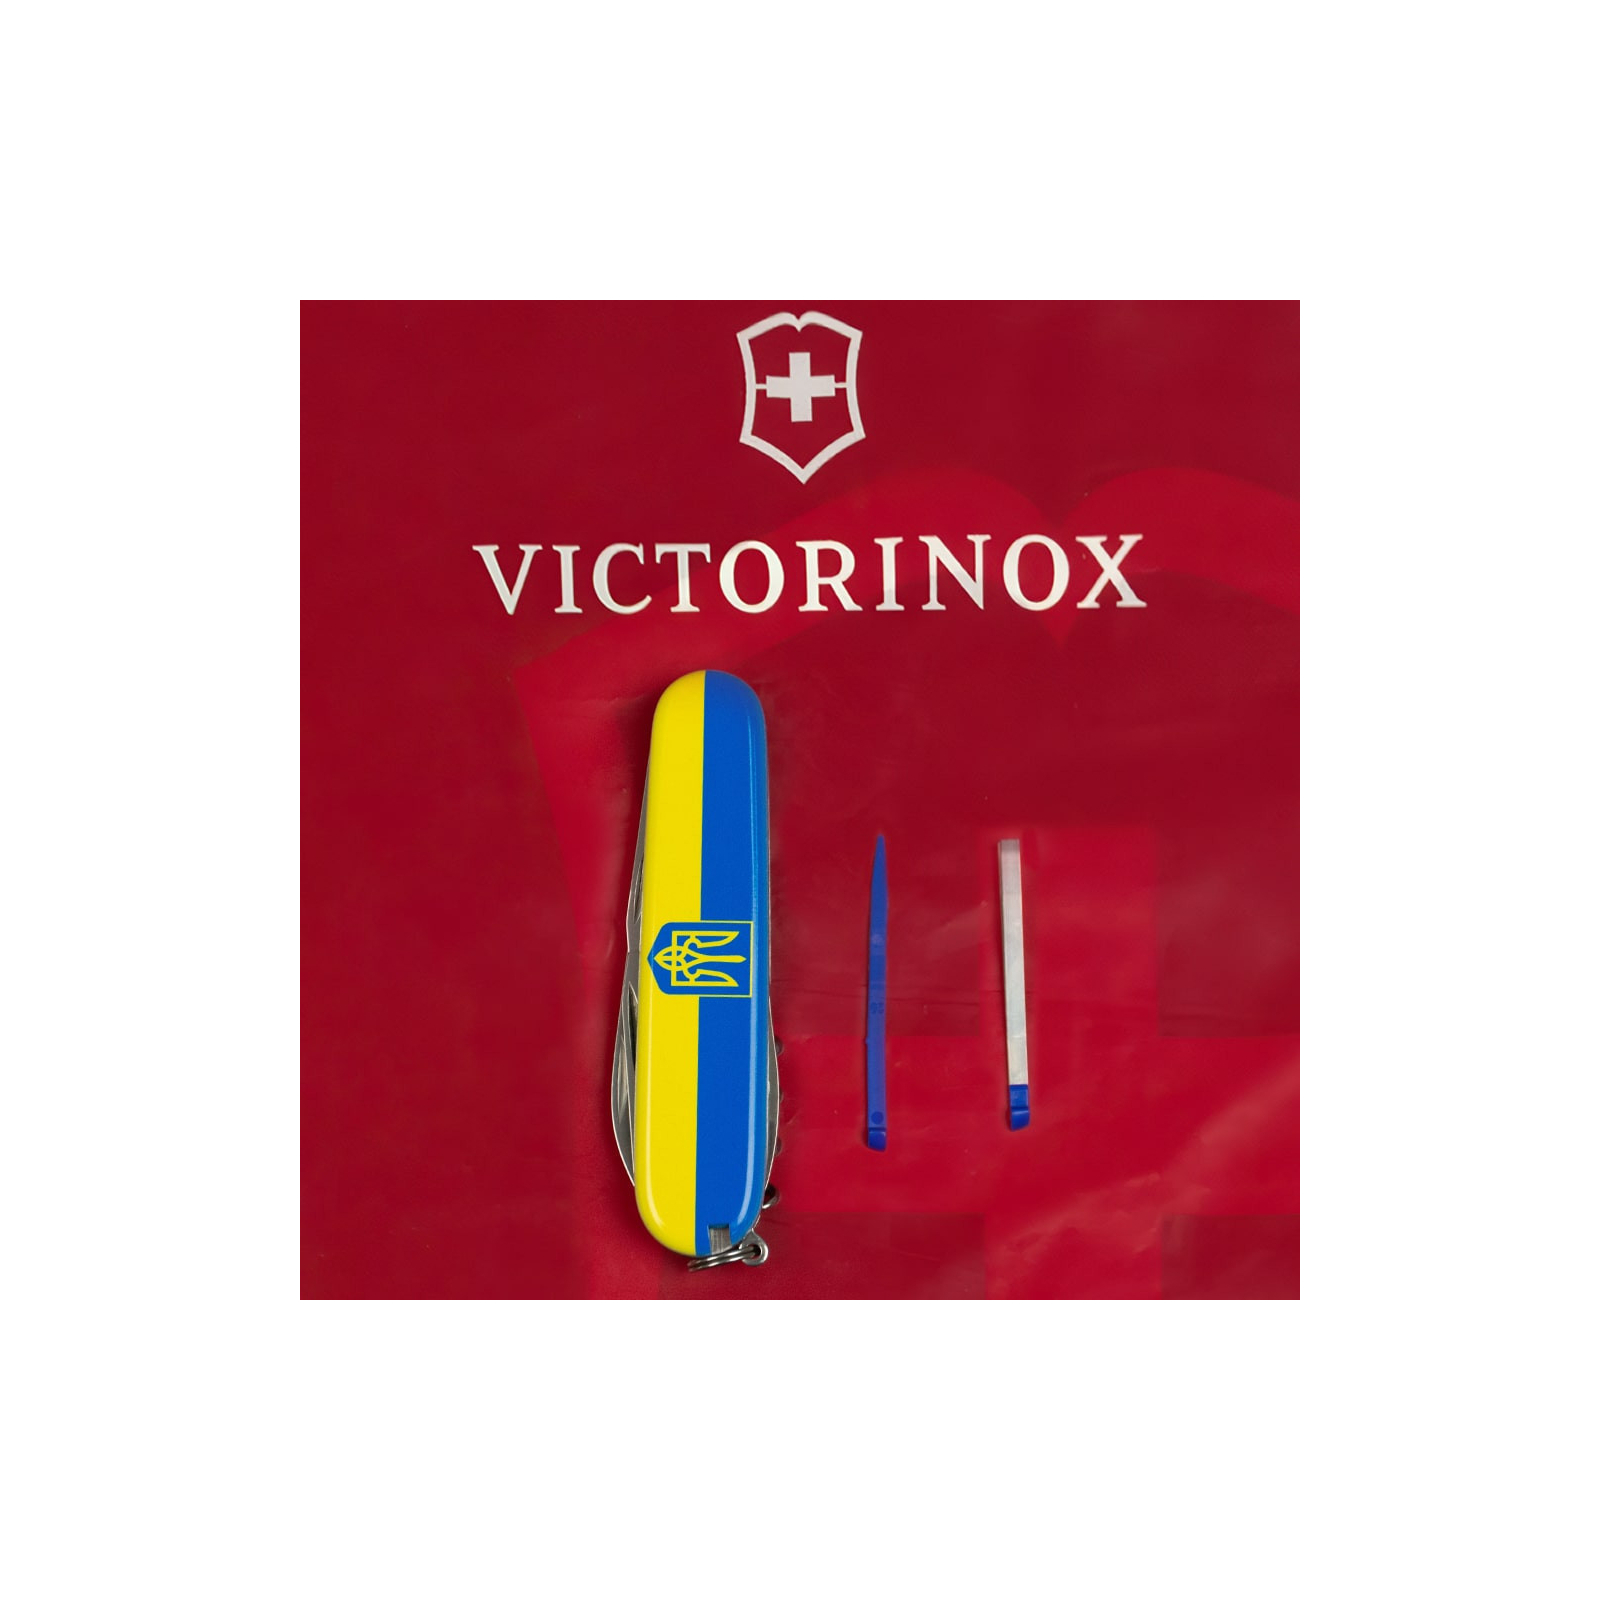 Нож Victorinox Spartan Ukraine 91 мм Жовто-синій малюнок (1.3603.7_T3100p) изображение 6